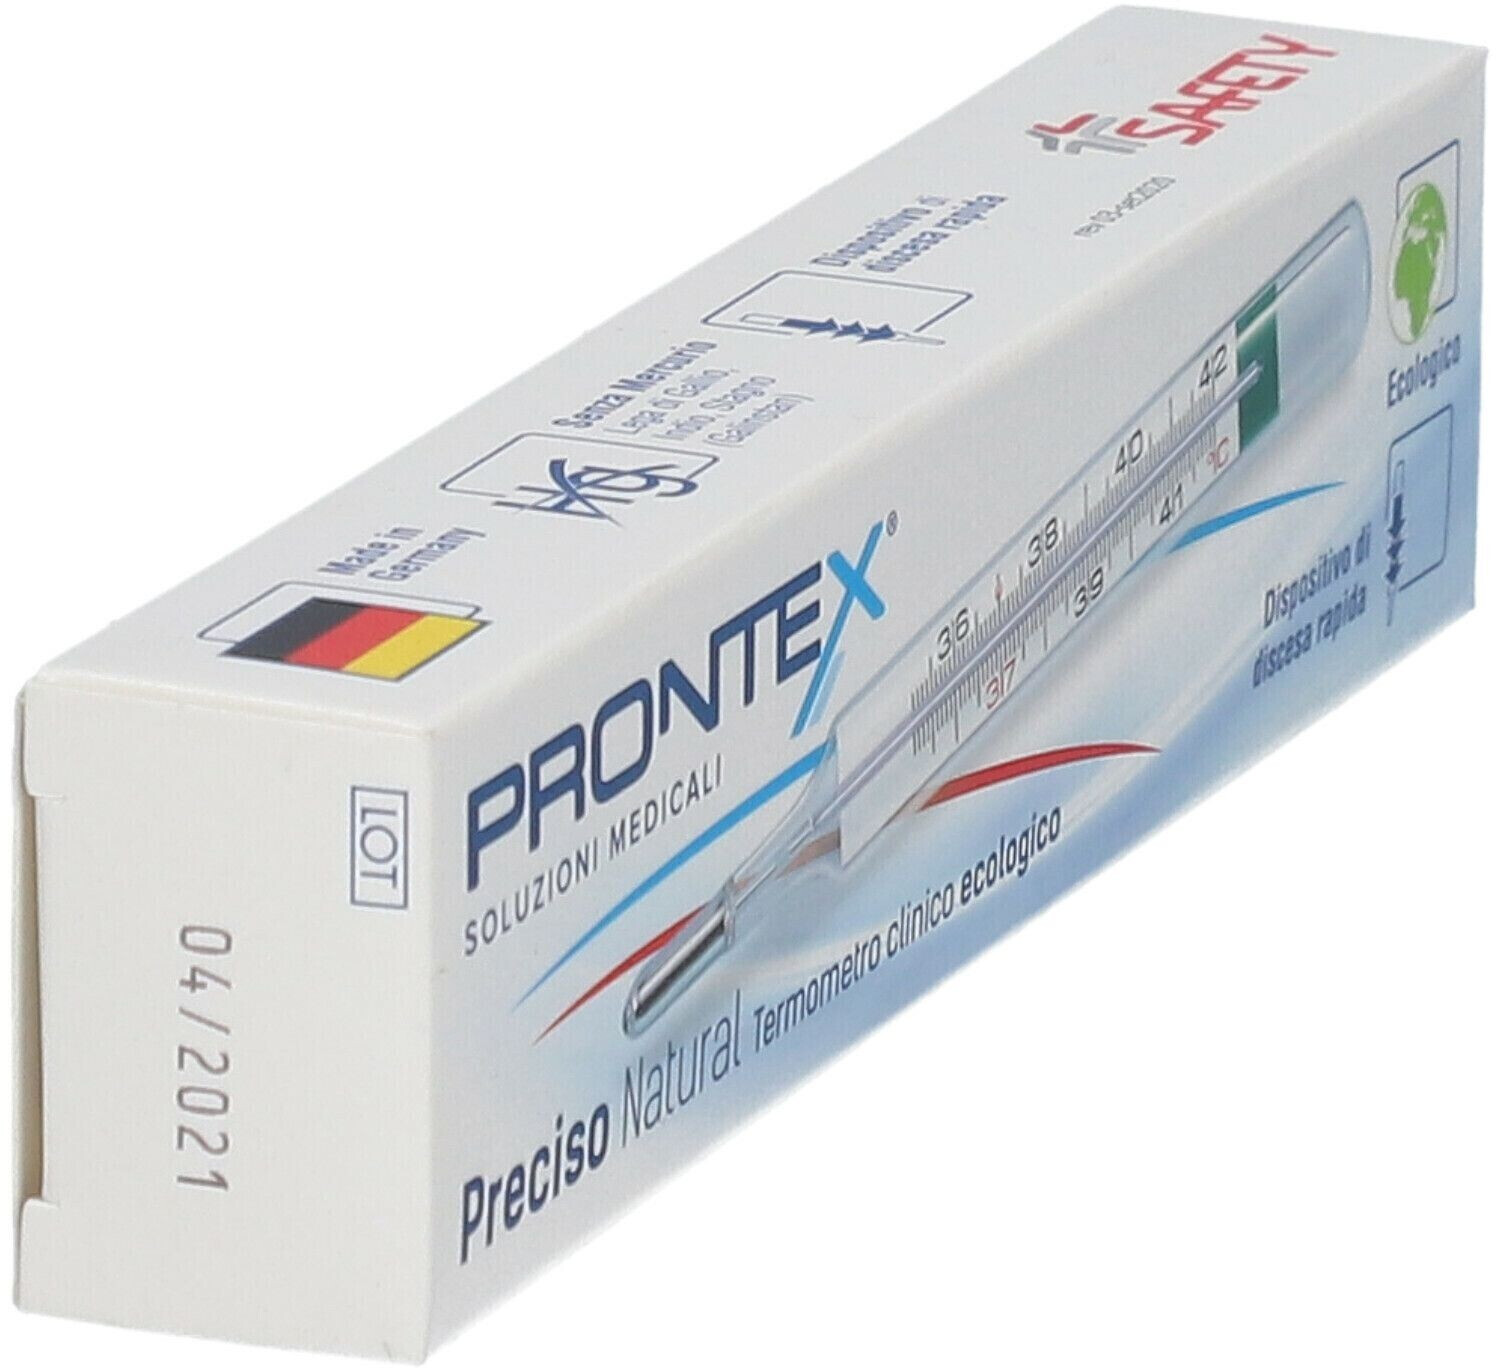 Prontex Termometro Eco a € 7,72 (oggi)